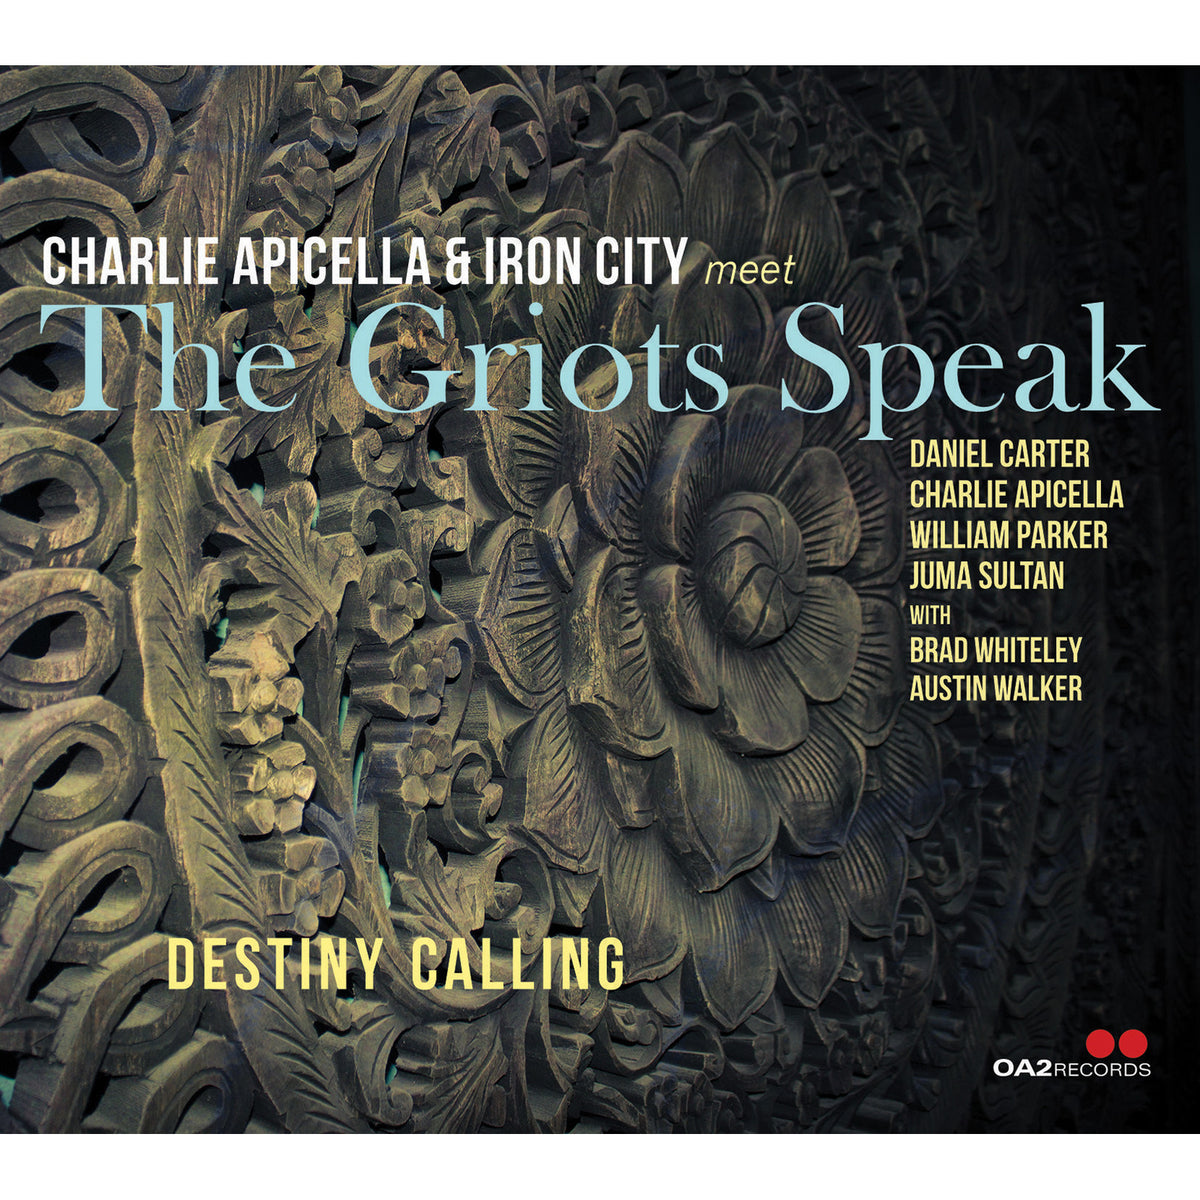 Charlie Apicella & Iron City meet The Griots Speak - Destiny Calling - OA222214